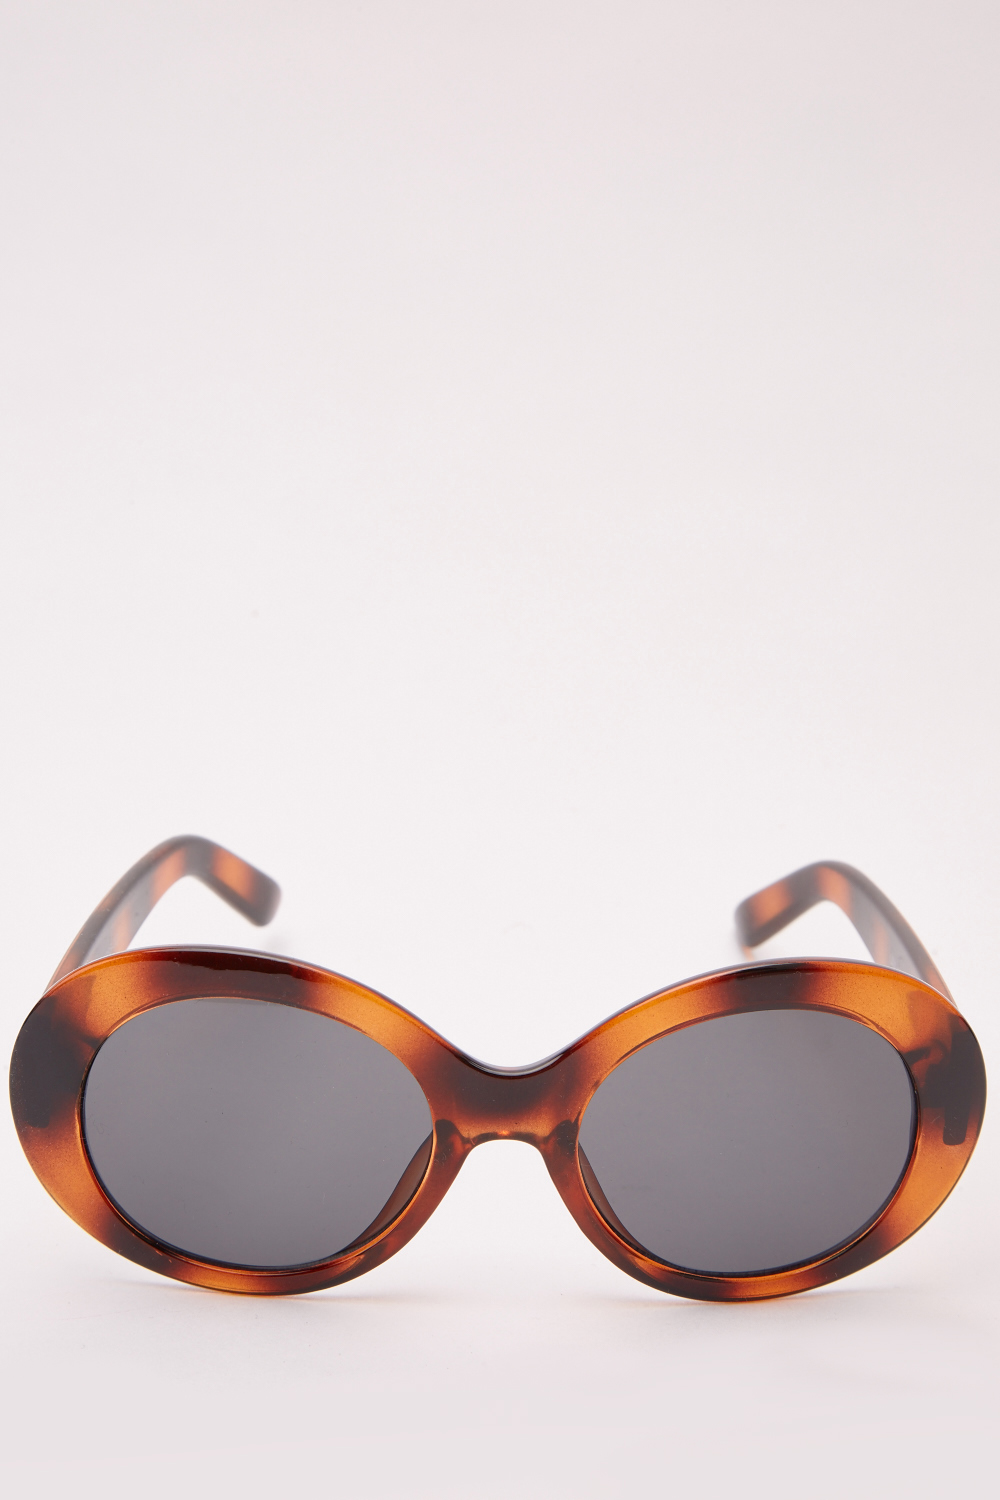 Tortoise Shell Oval Sunglasses - Just $3